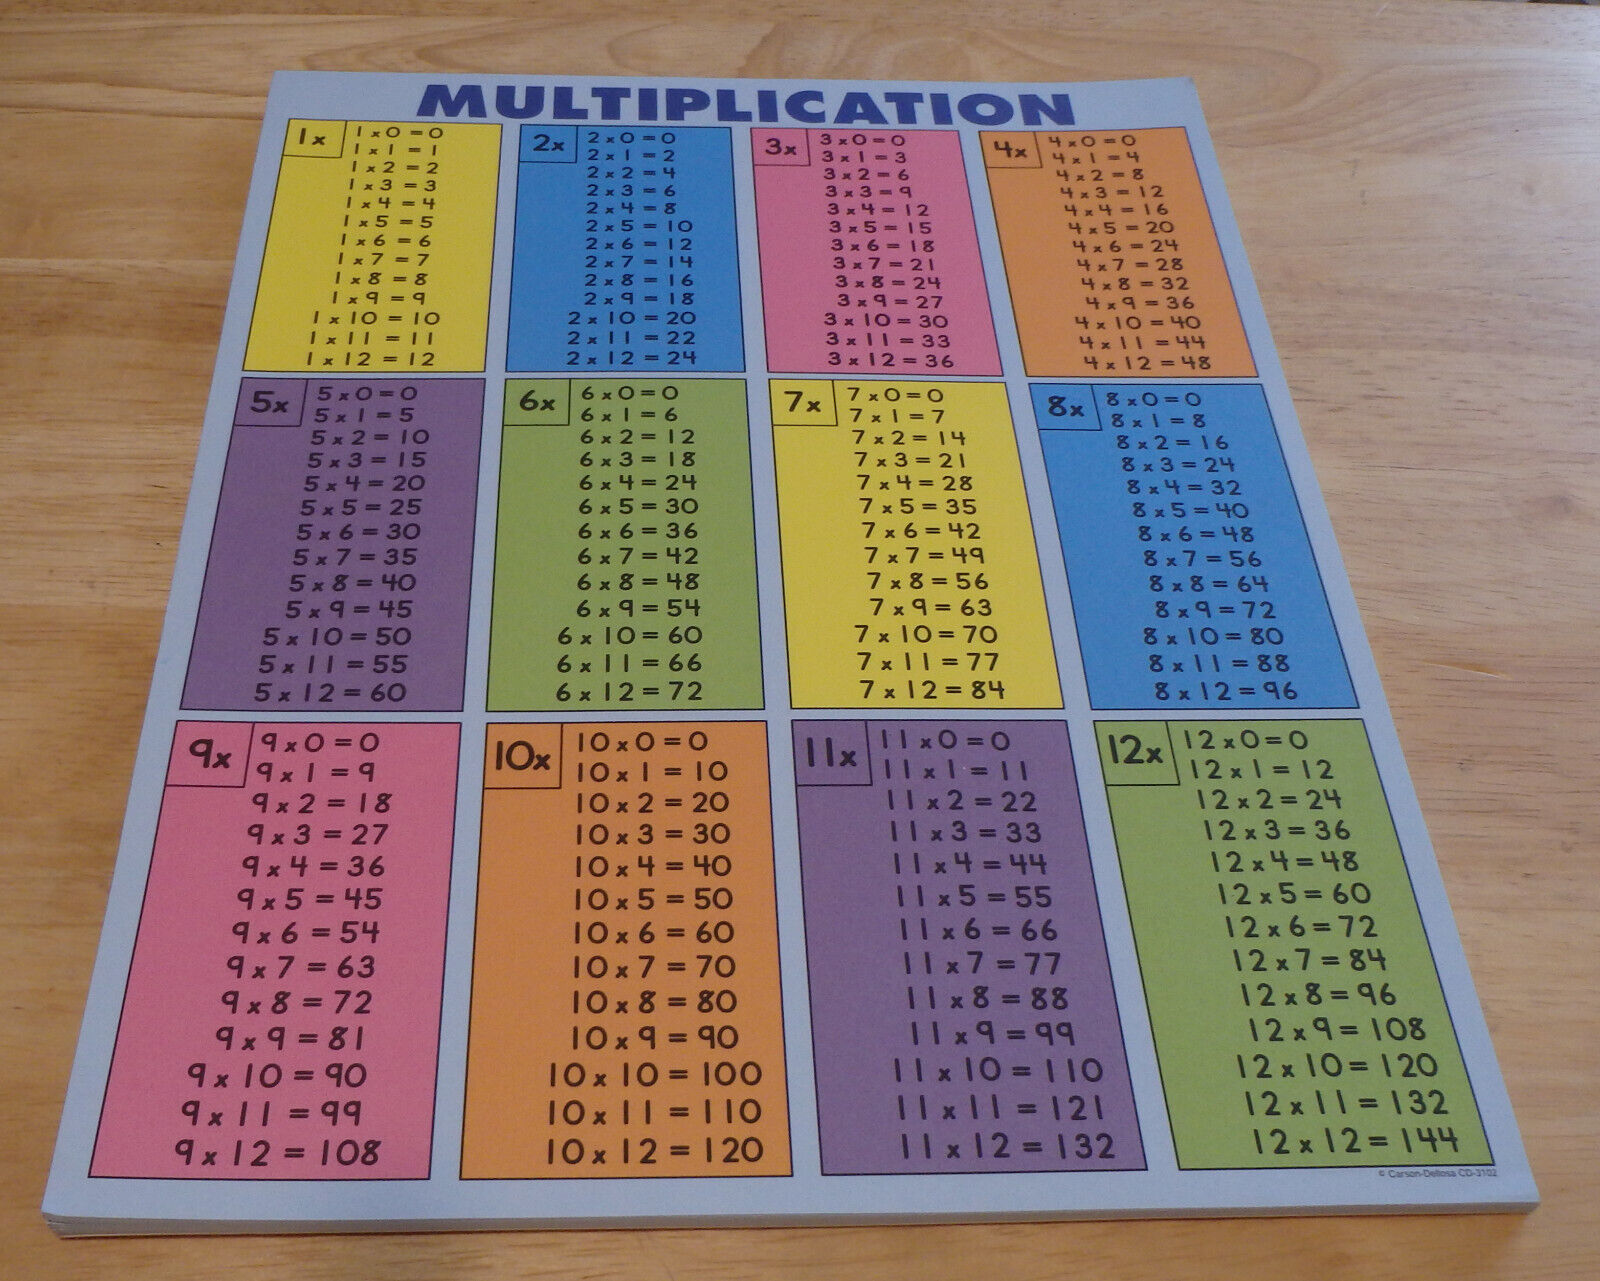 Carson Dellosa 3102 Multiplication Tables Pad (29 sheets)